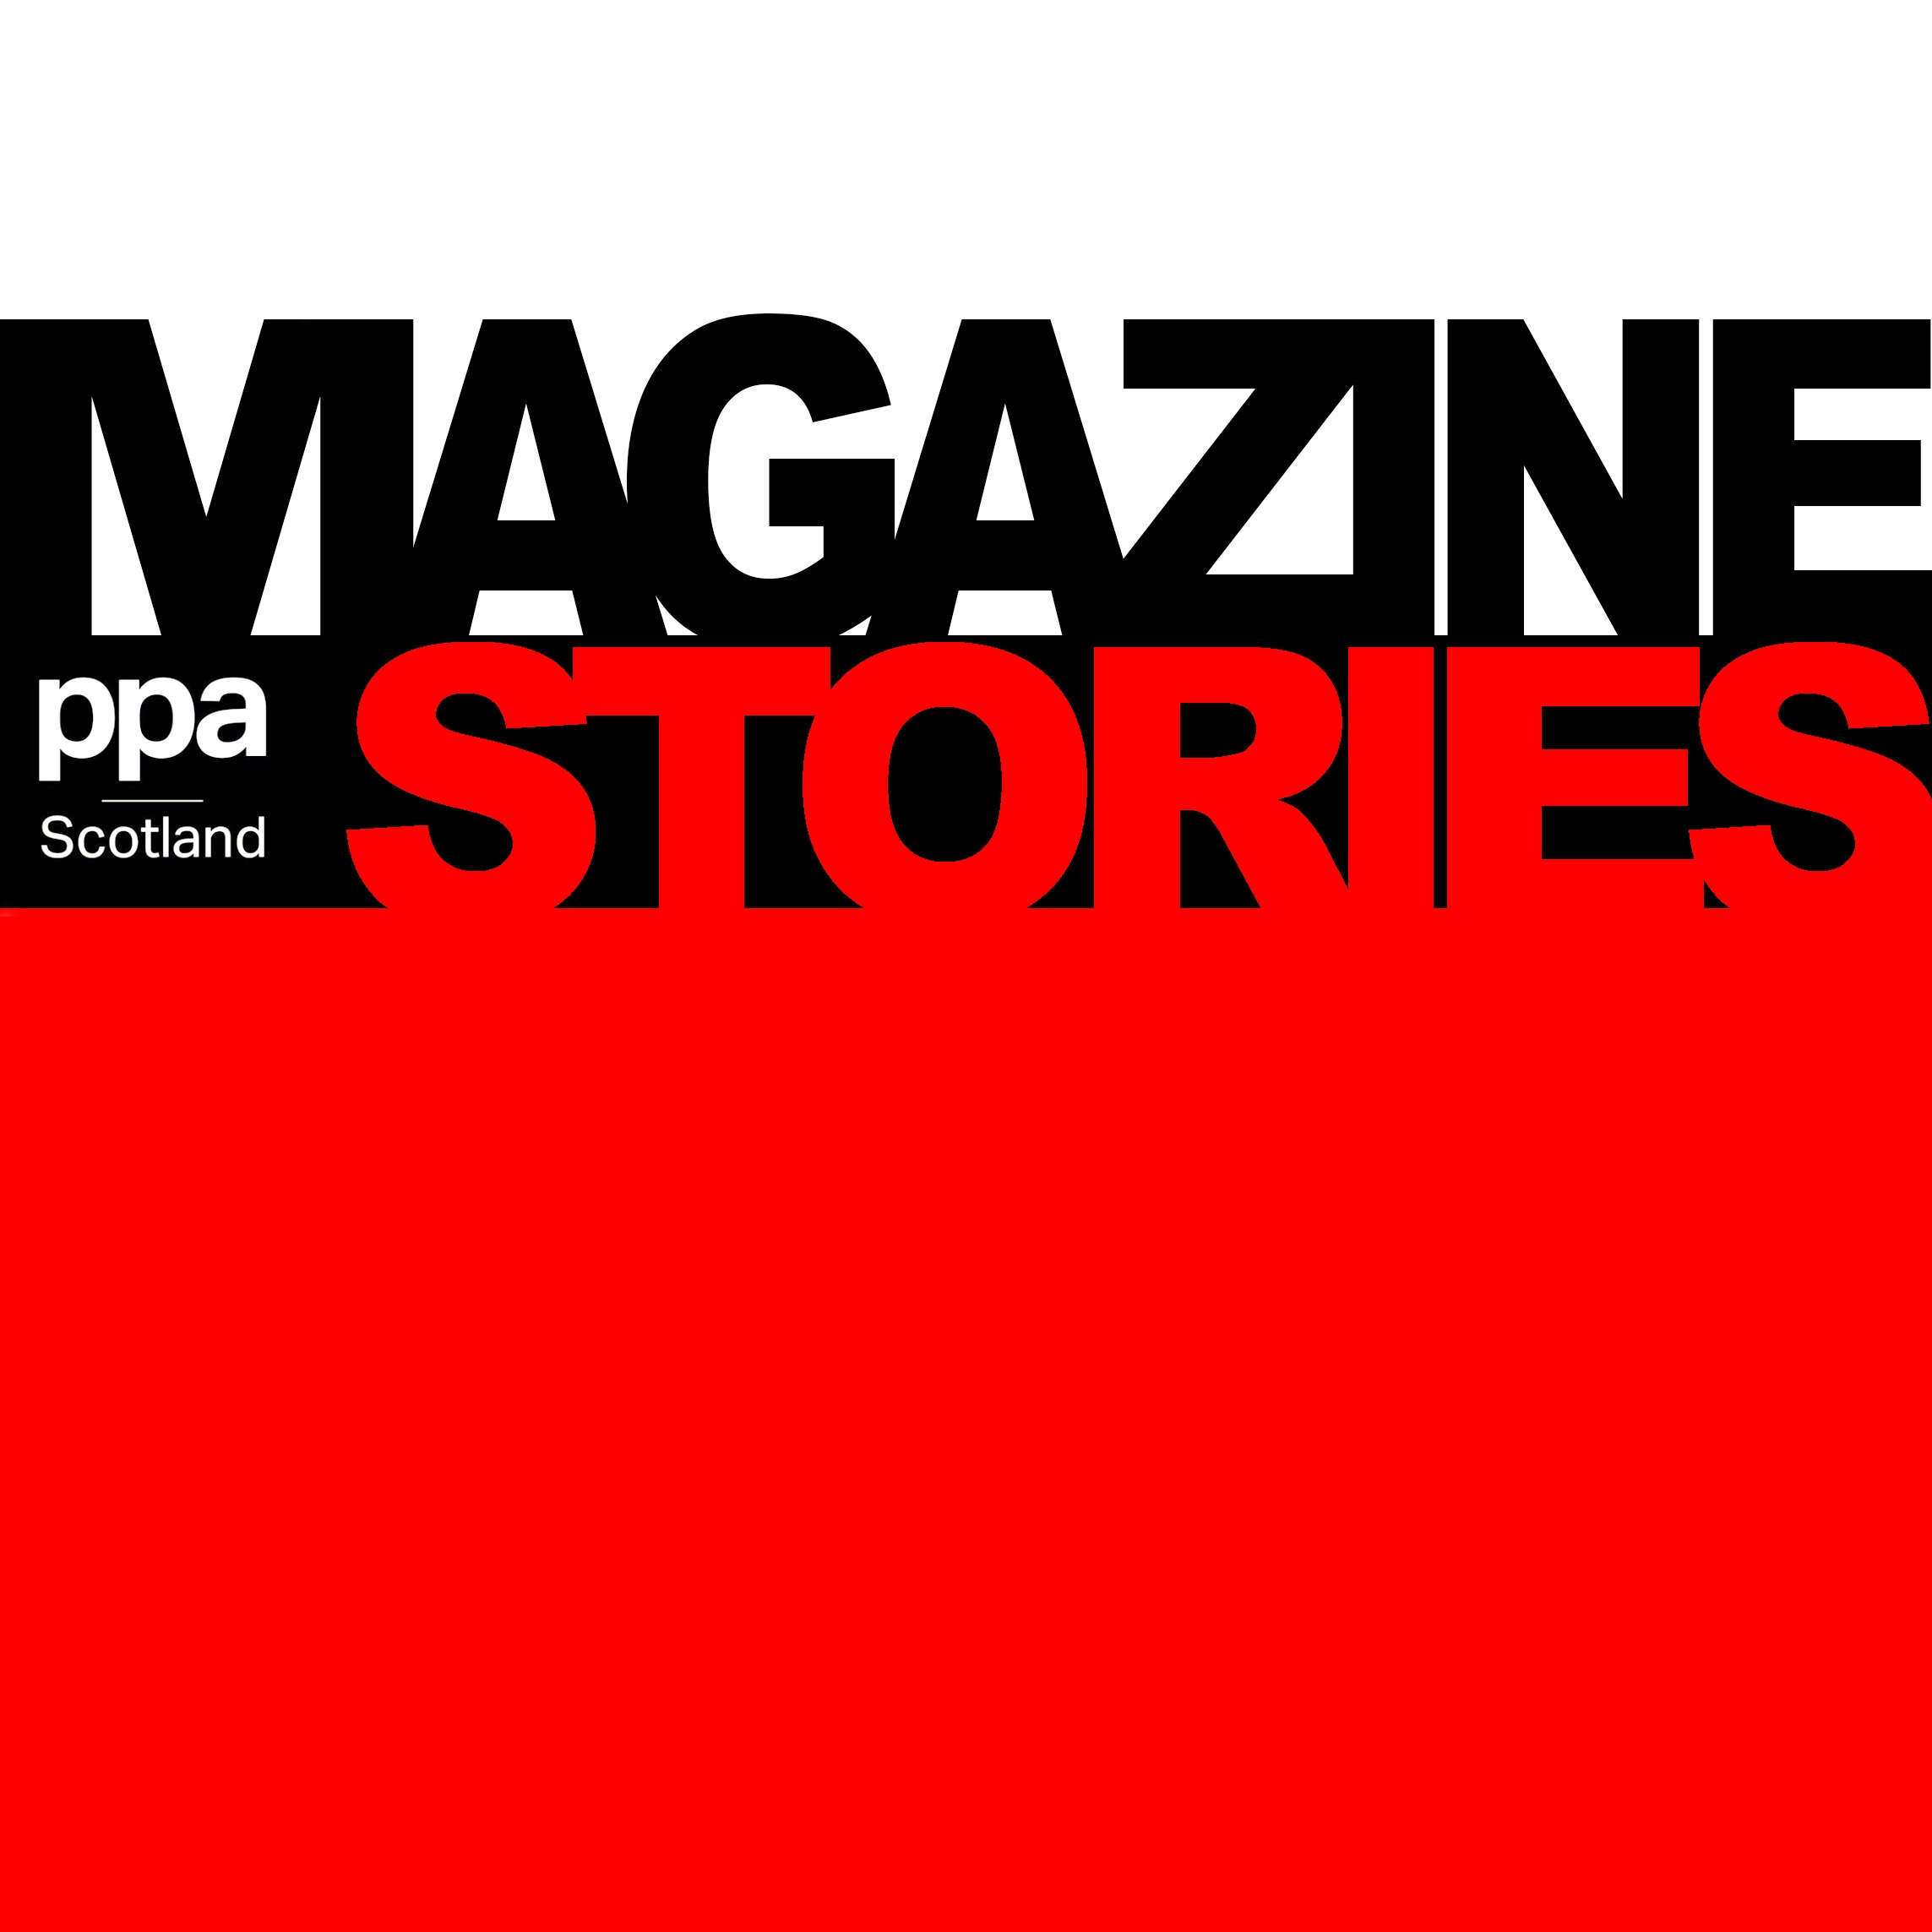 PPA Scotland Magazine Stories